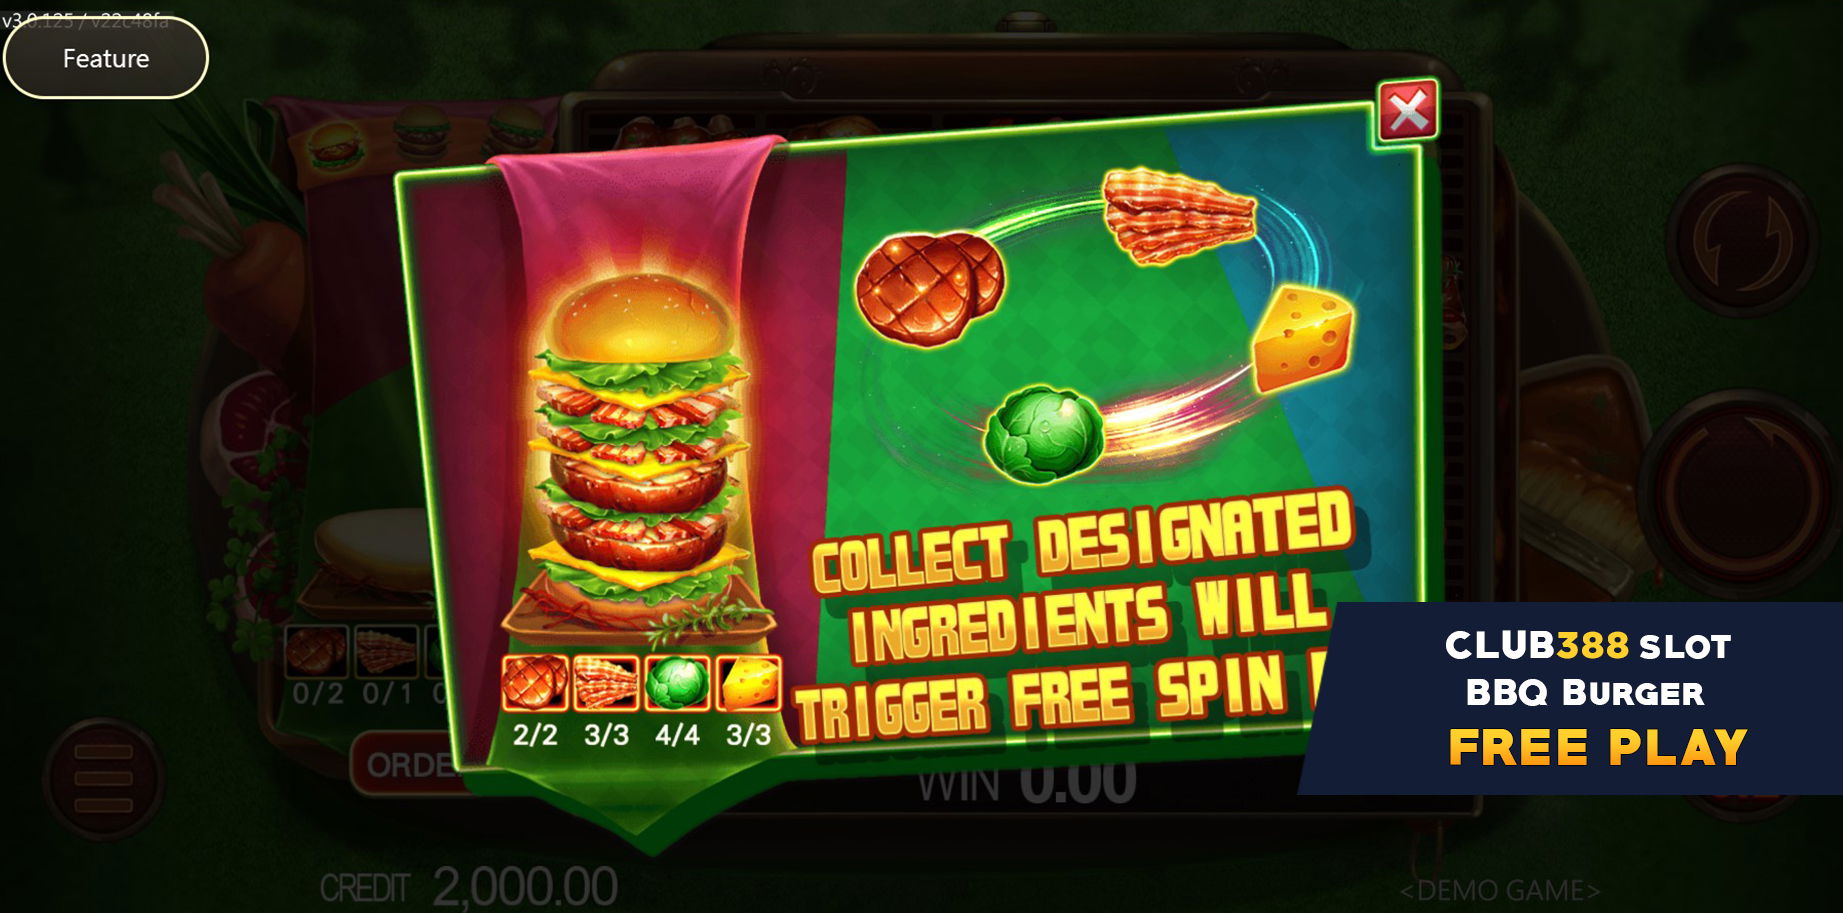 5 BBQ Burger Slot Game JDB Gaming - Club388